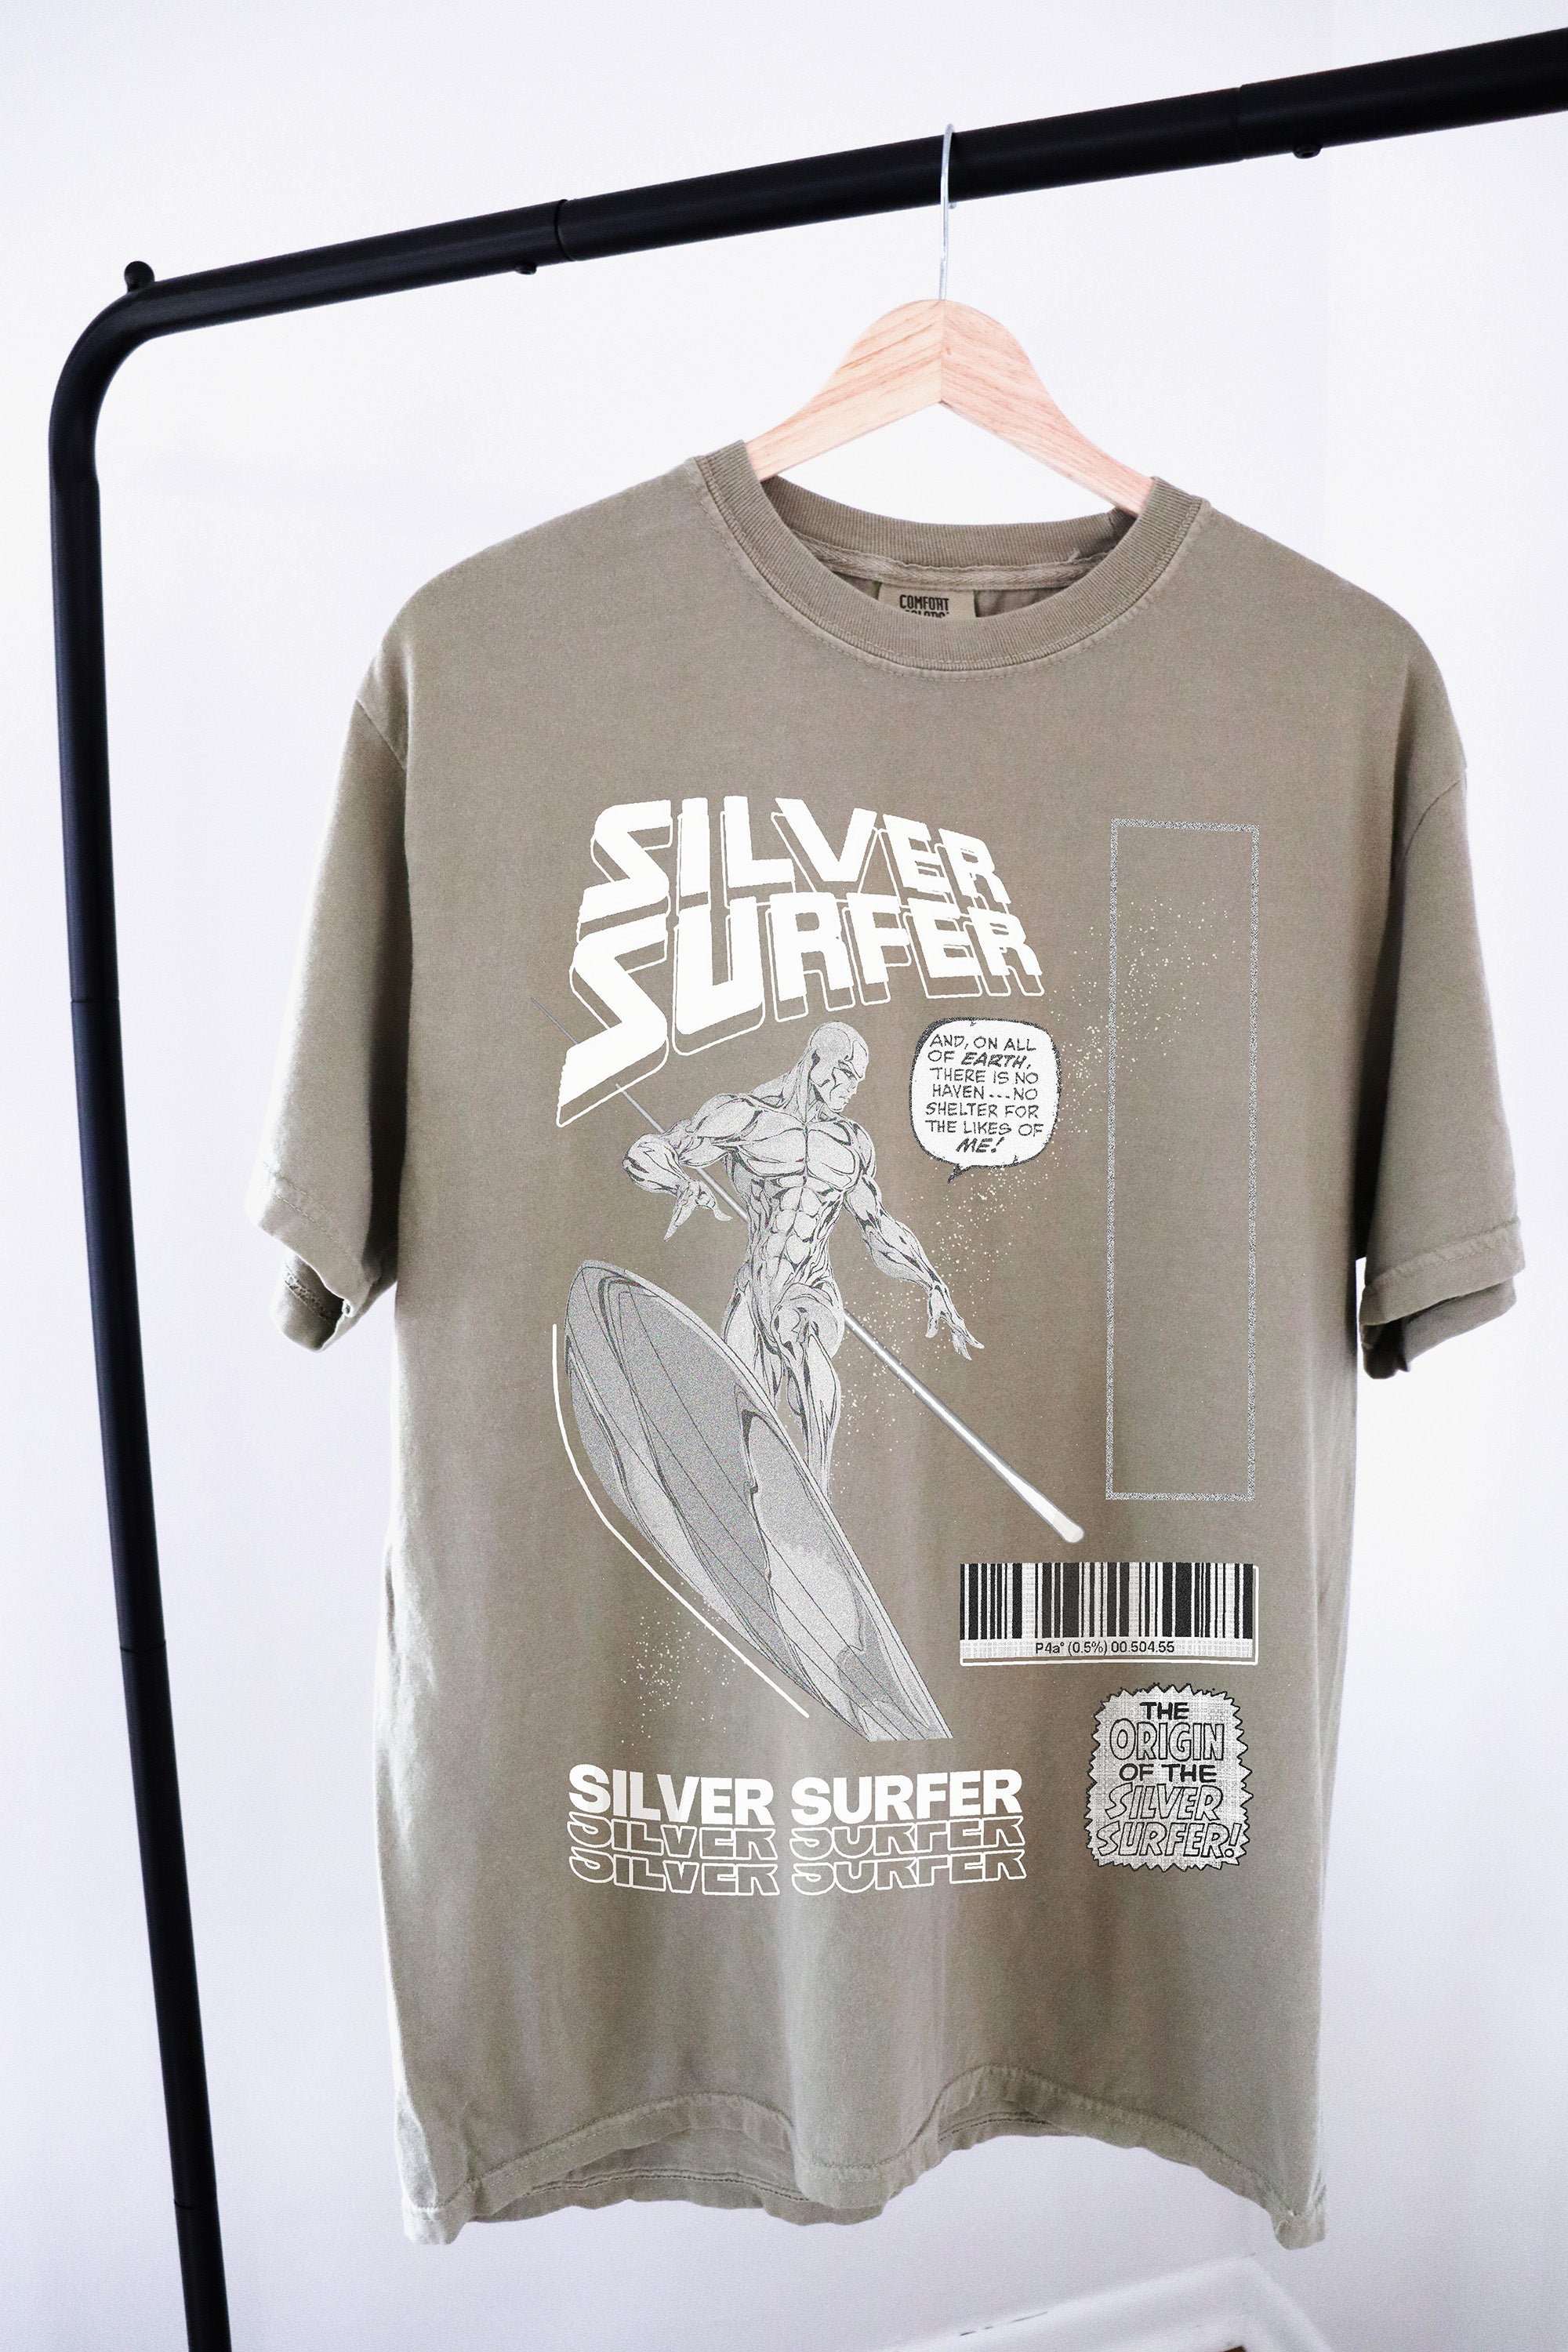 Silver Surfer Comic Book Tee